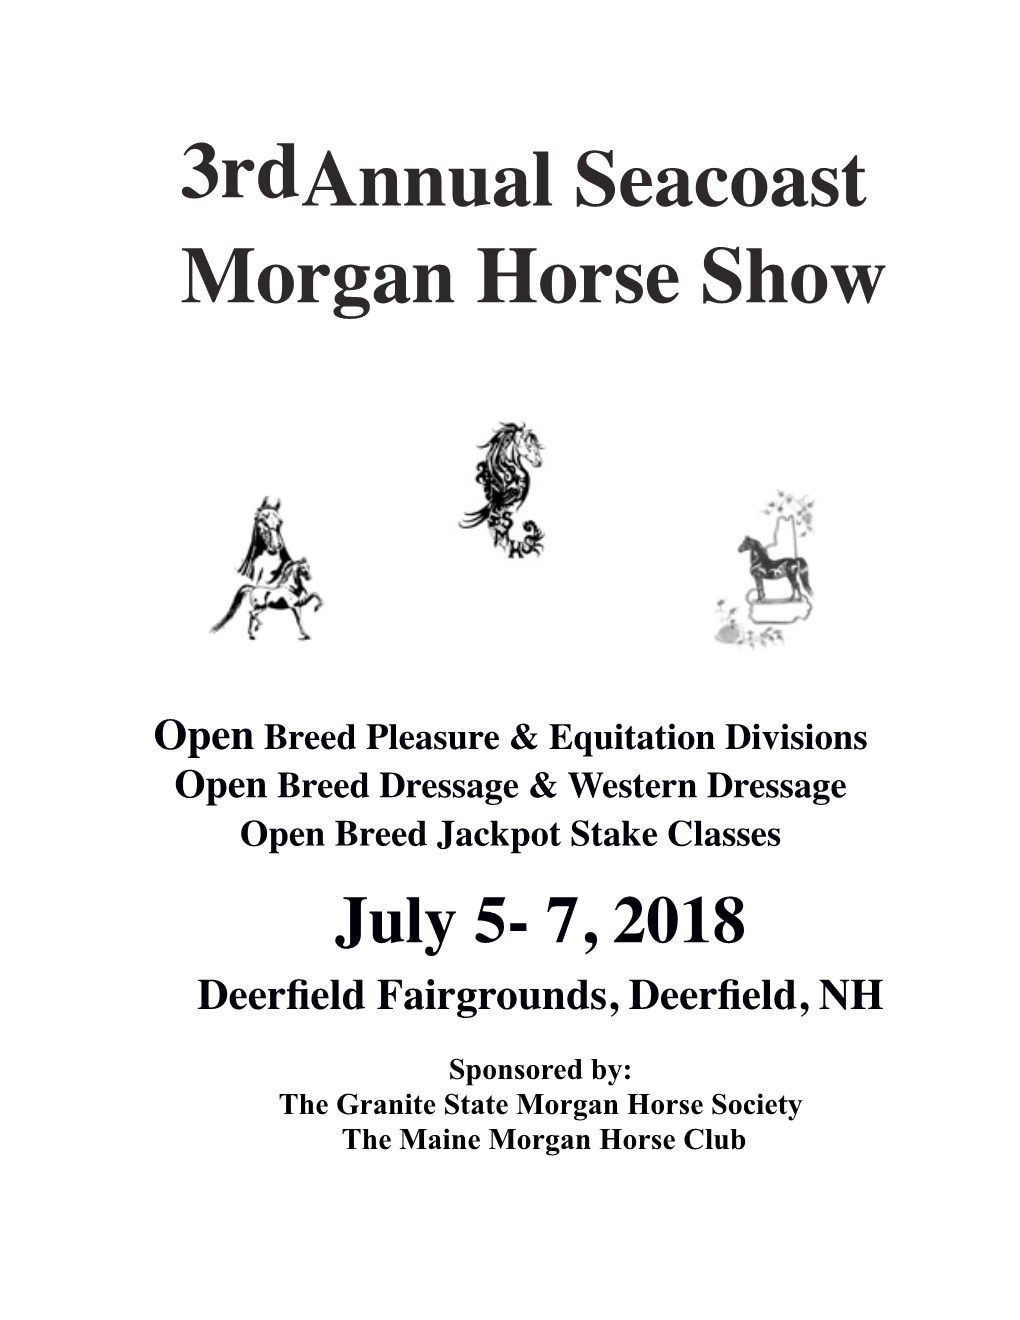 3Rdannual Seacoast Morgan Horse Show